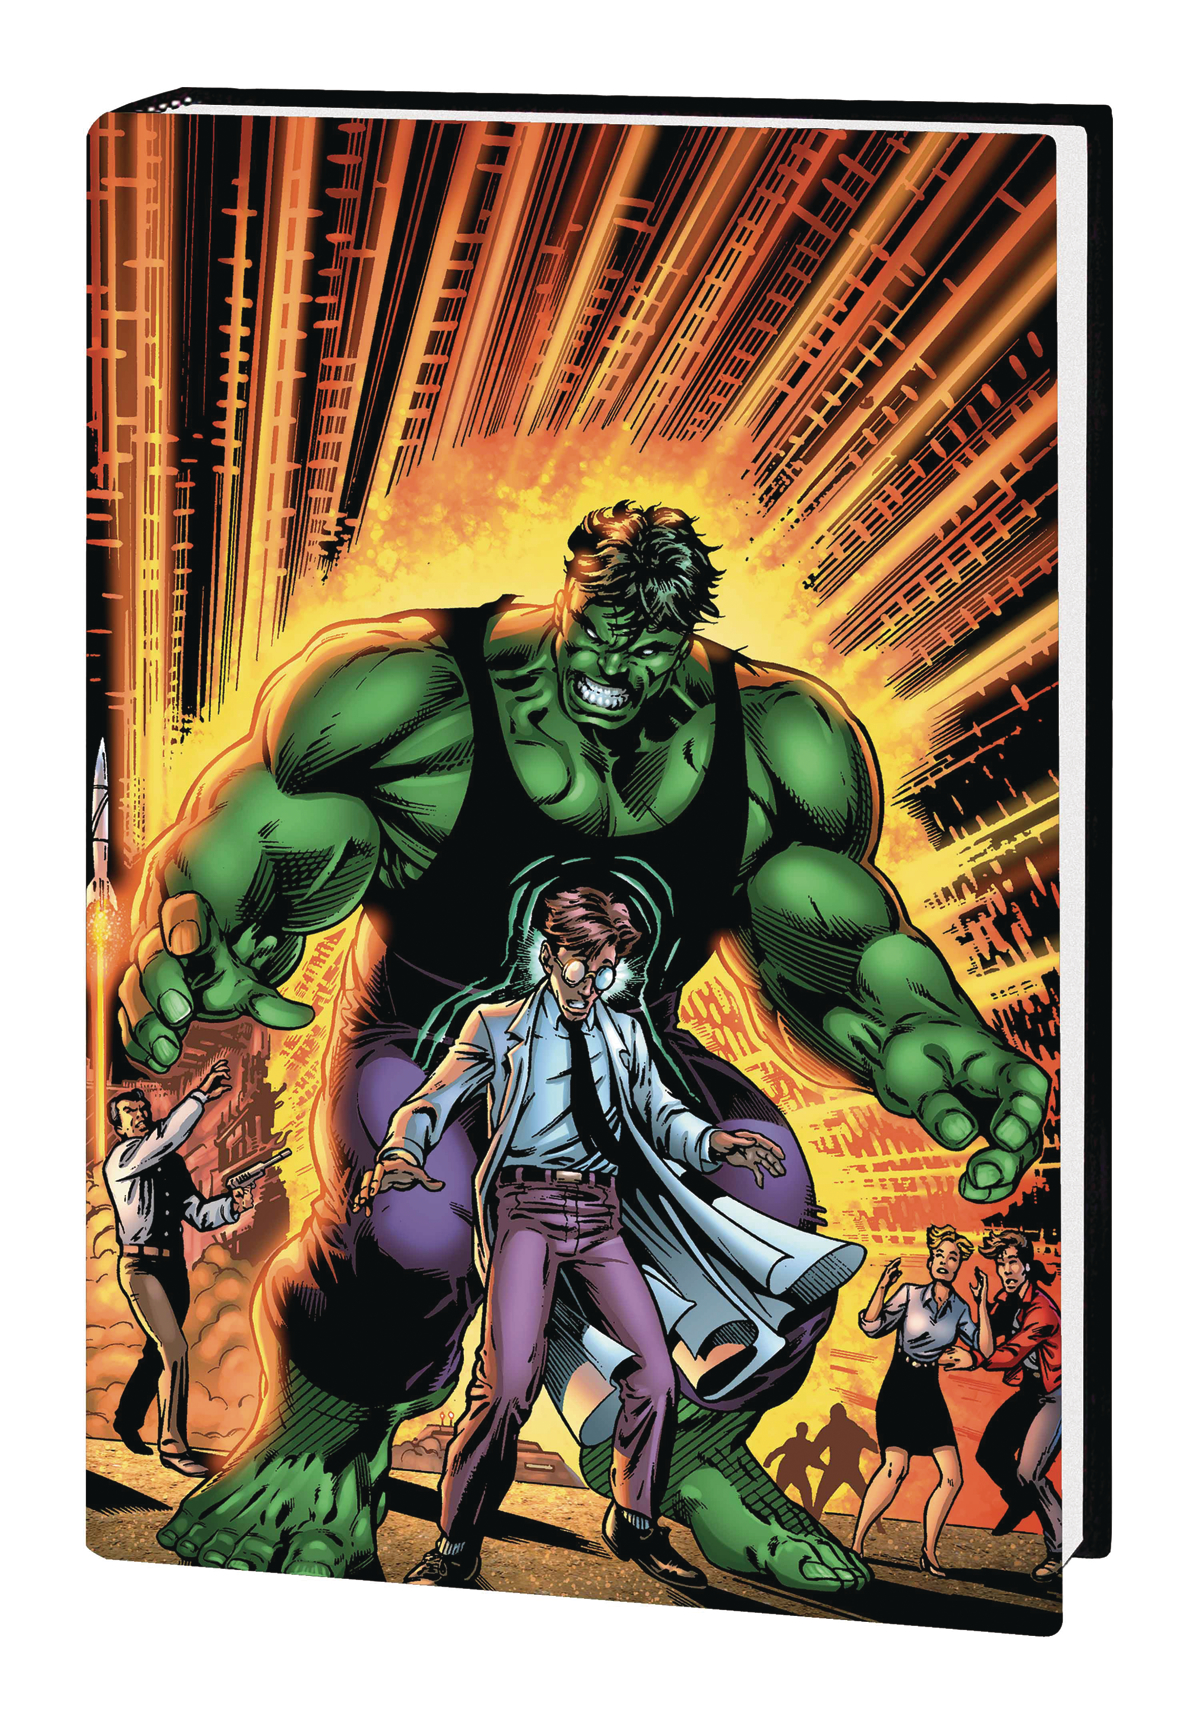 Incredible Hulk by Peter David Omnibus Hardcover Volume 2 Keown Anniversary Direct Market Variant